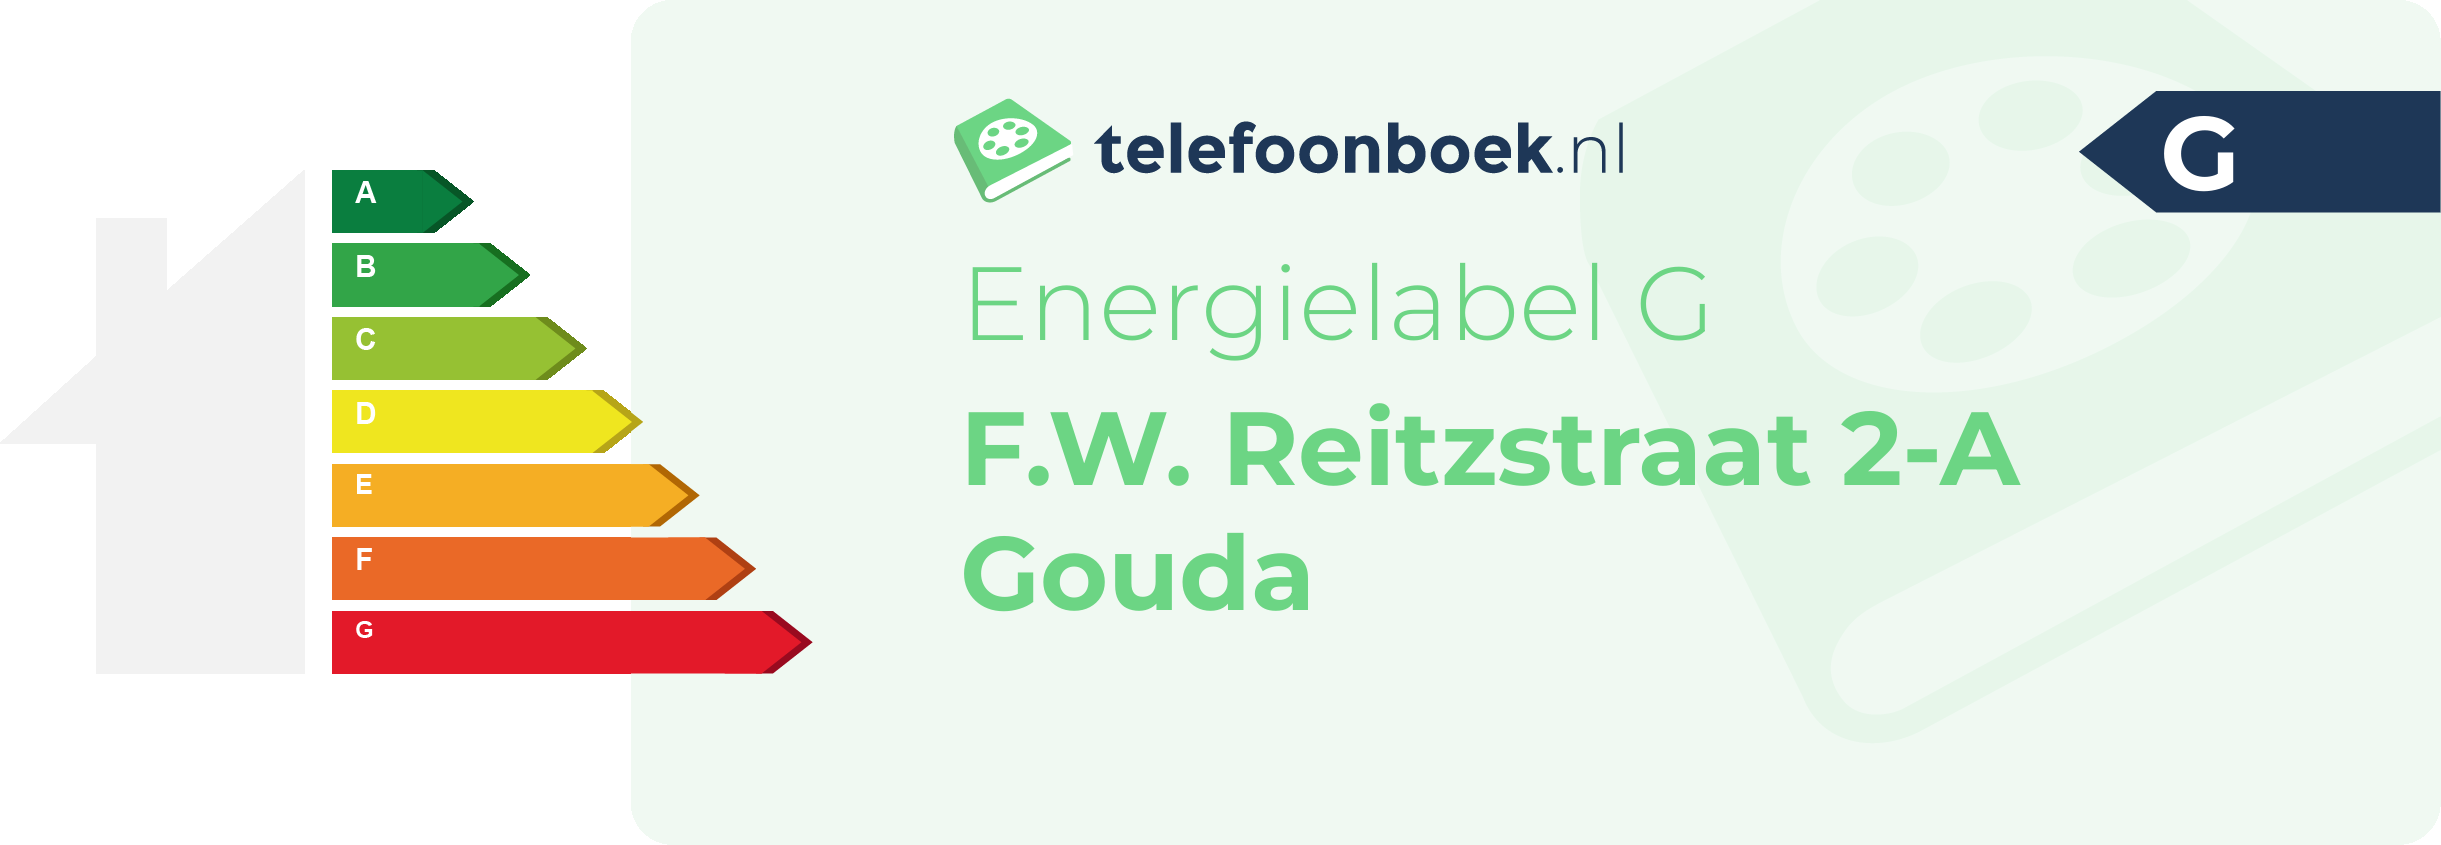 Energielabel F.W. Reitzstraat 2-A Gouda